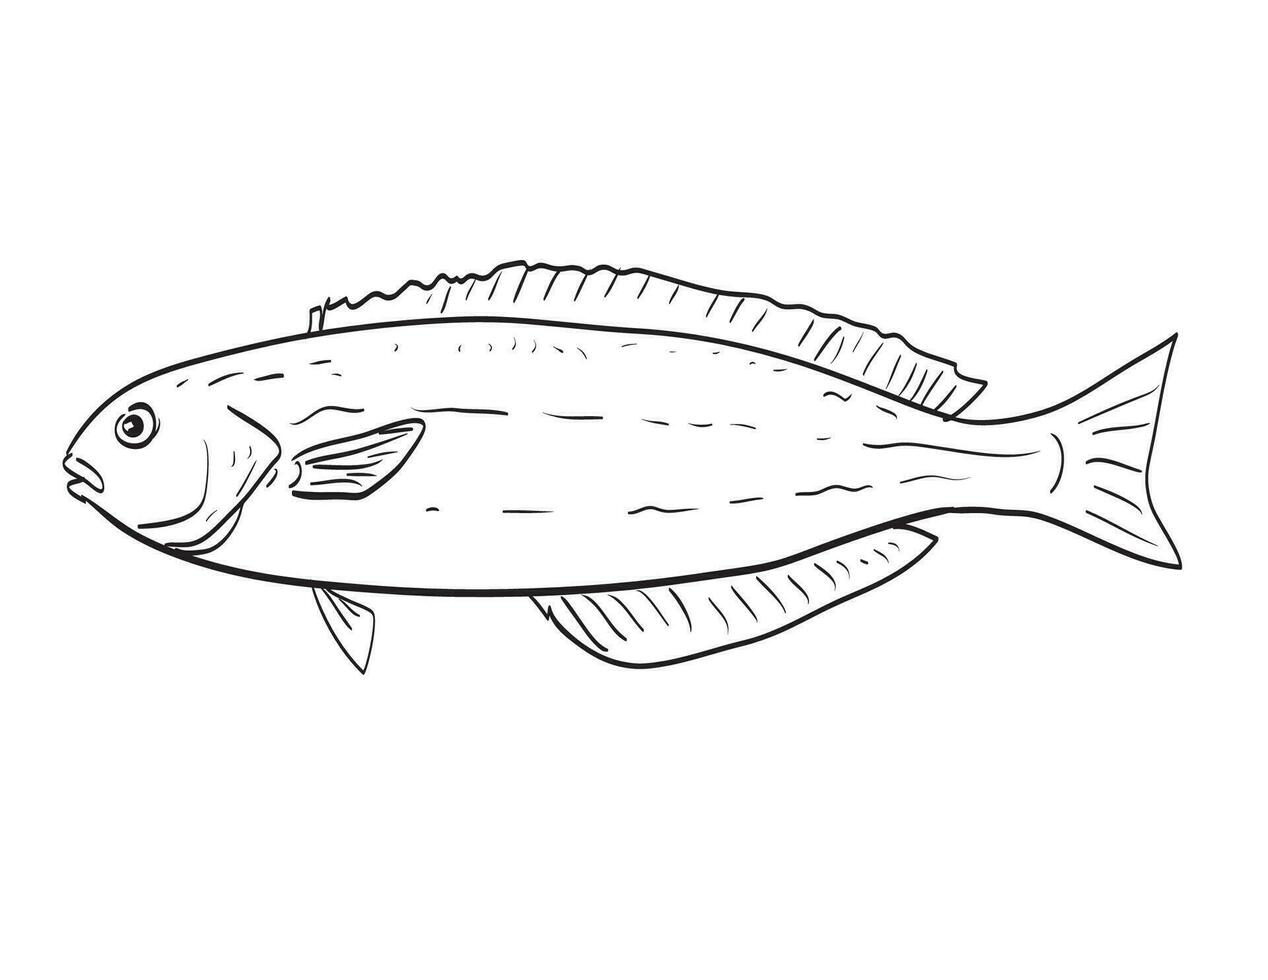 Ocean whitefish Side View Cartoon Drawing vector